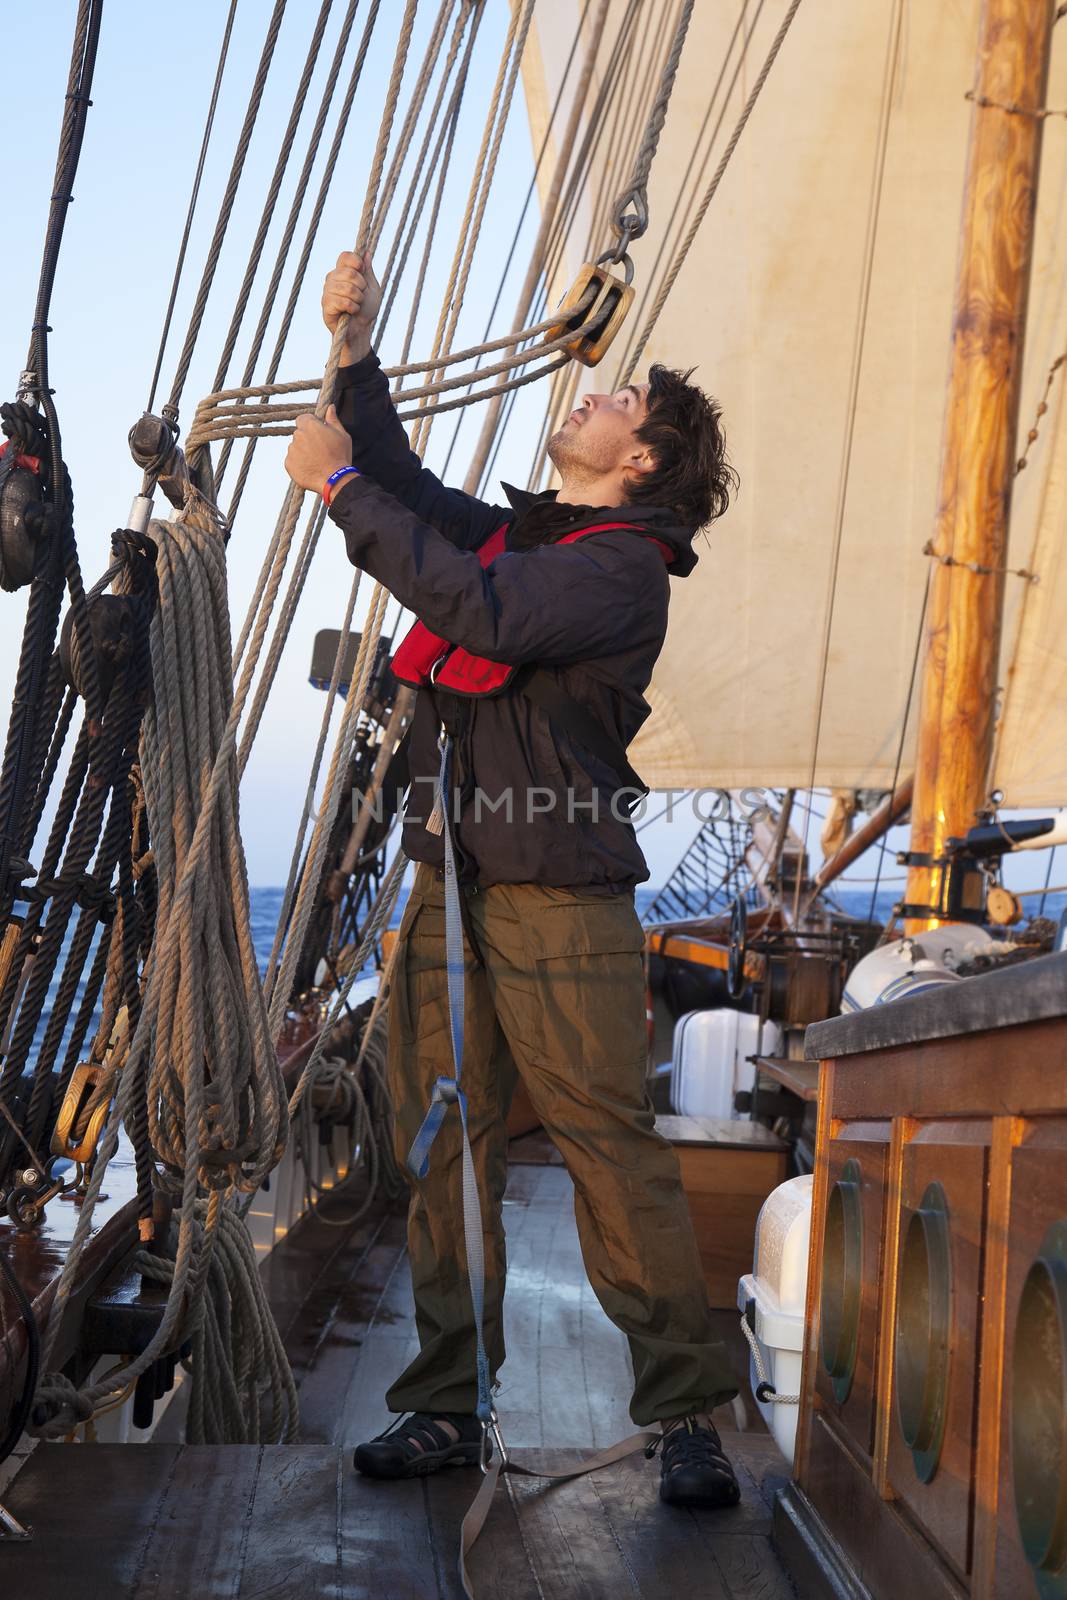 Young sailor on a ship's deck hoisting a sail